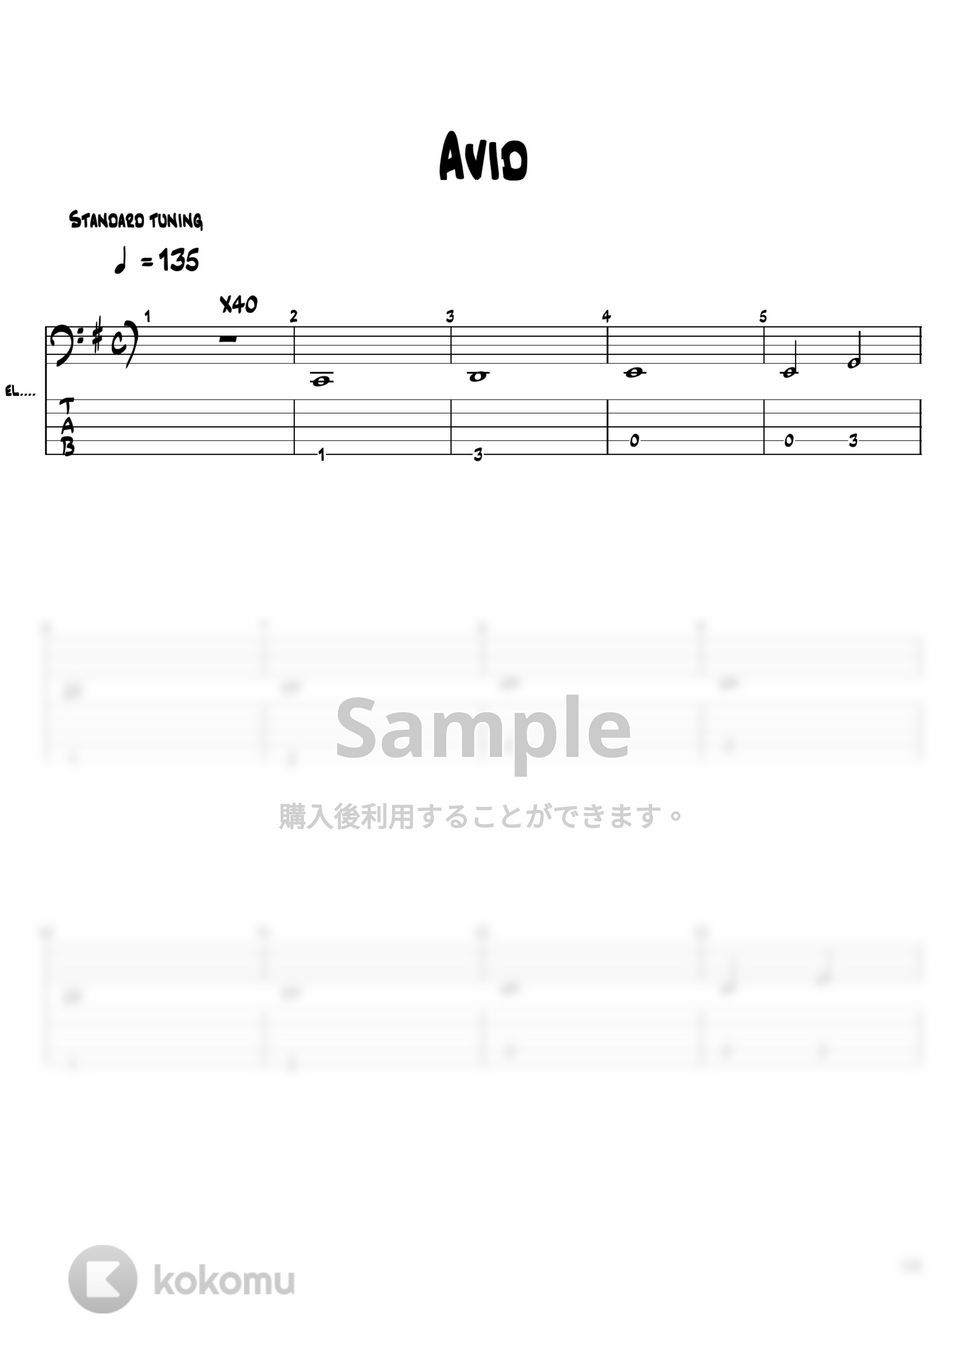 SawanoHiroyuki - Avid (Eighty Six OST) by 김날새